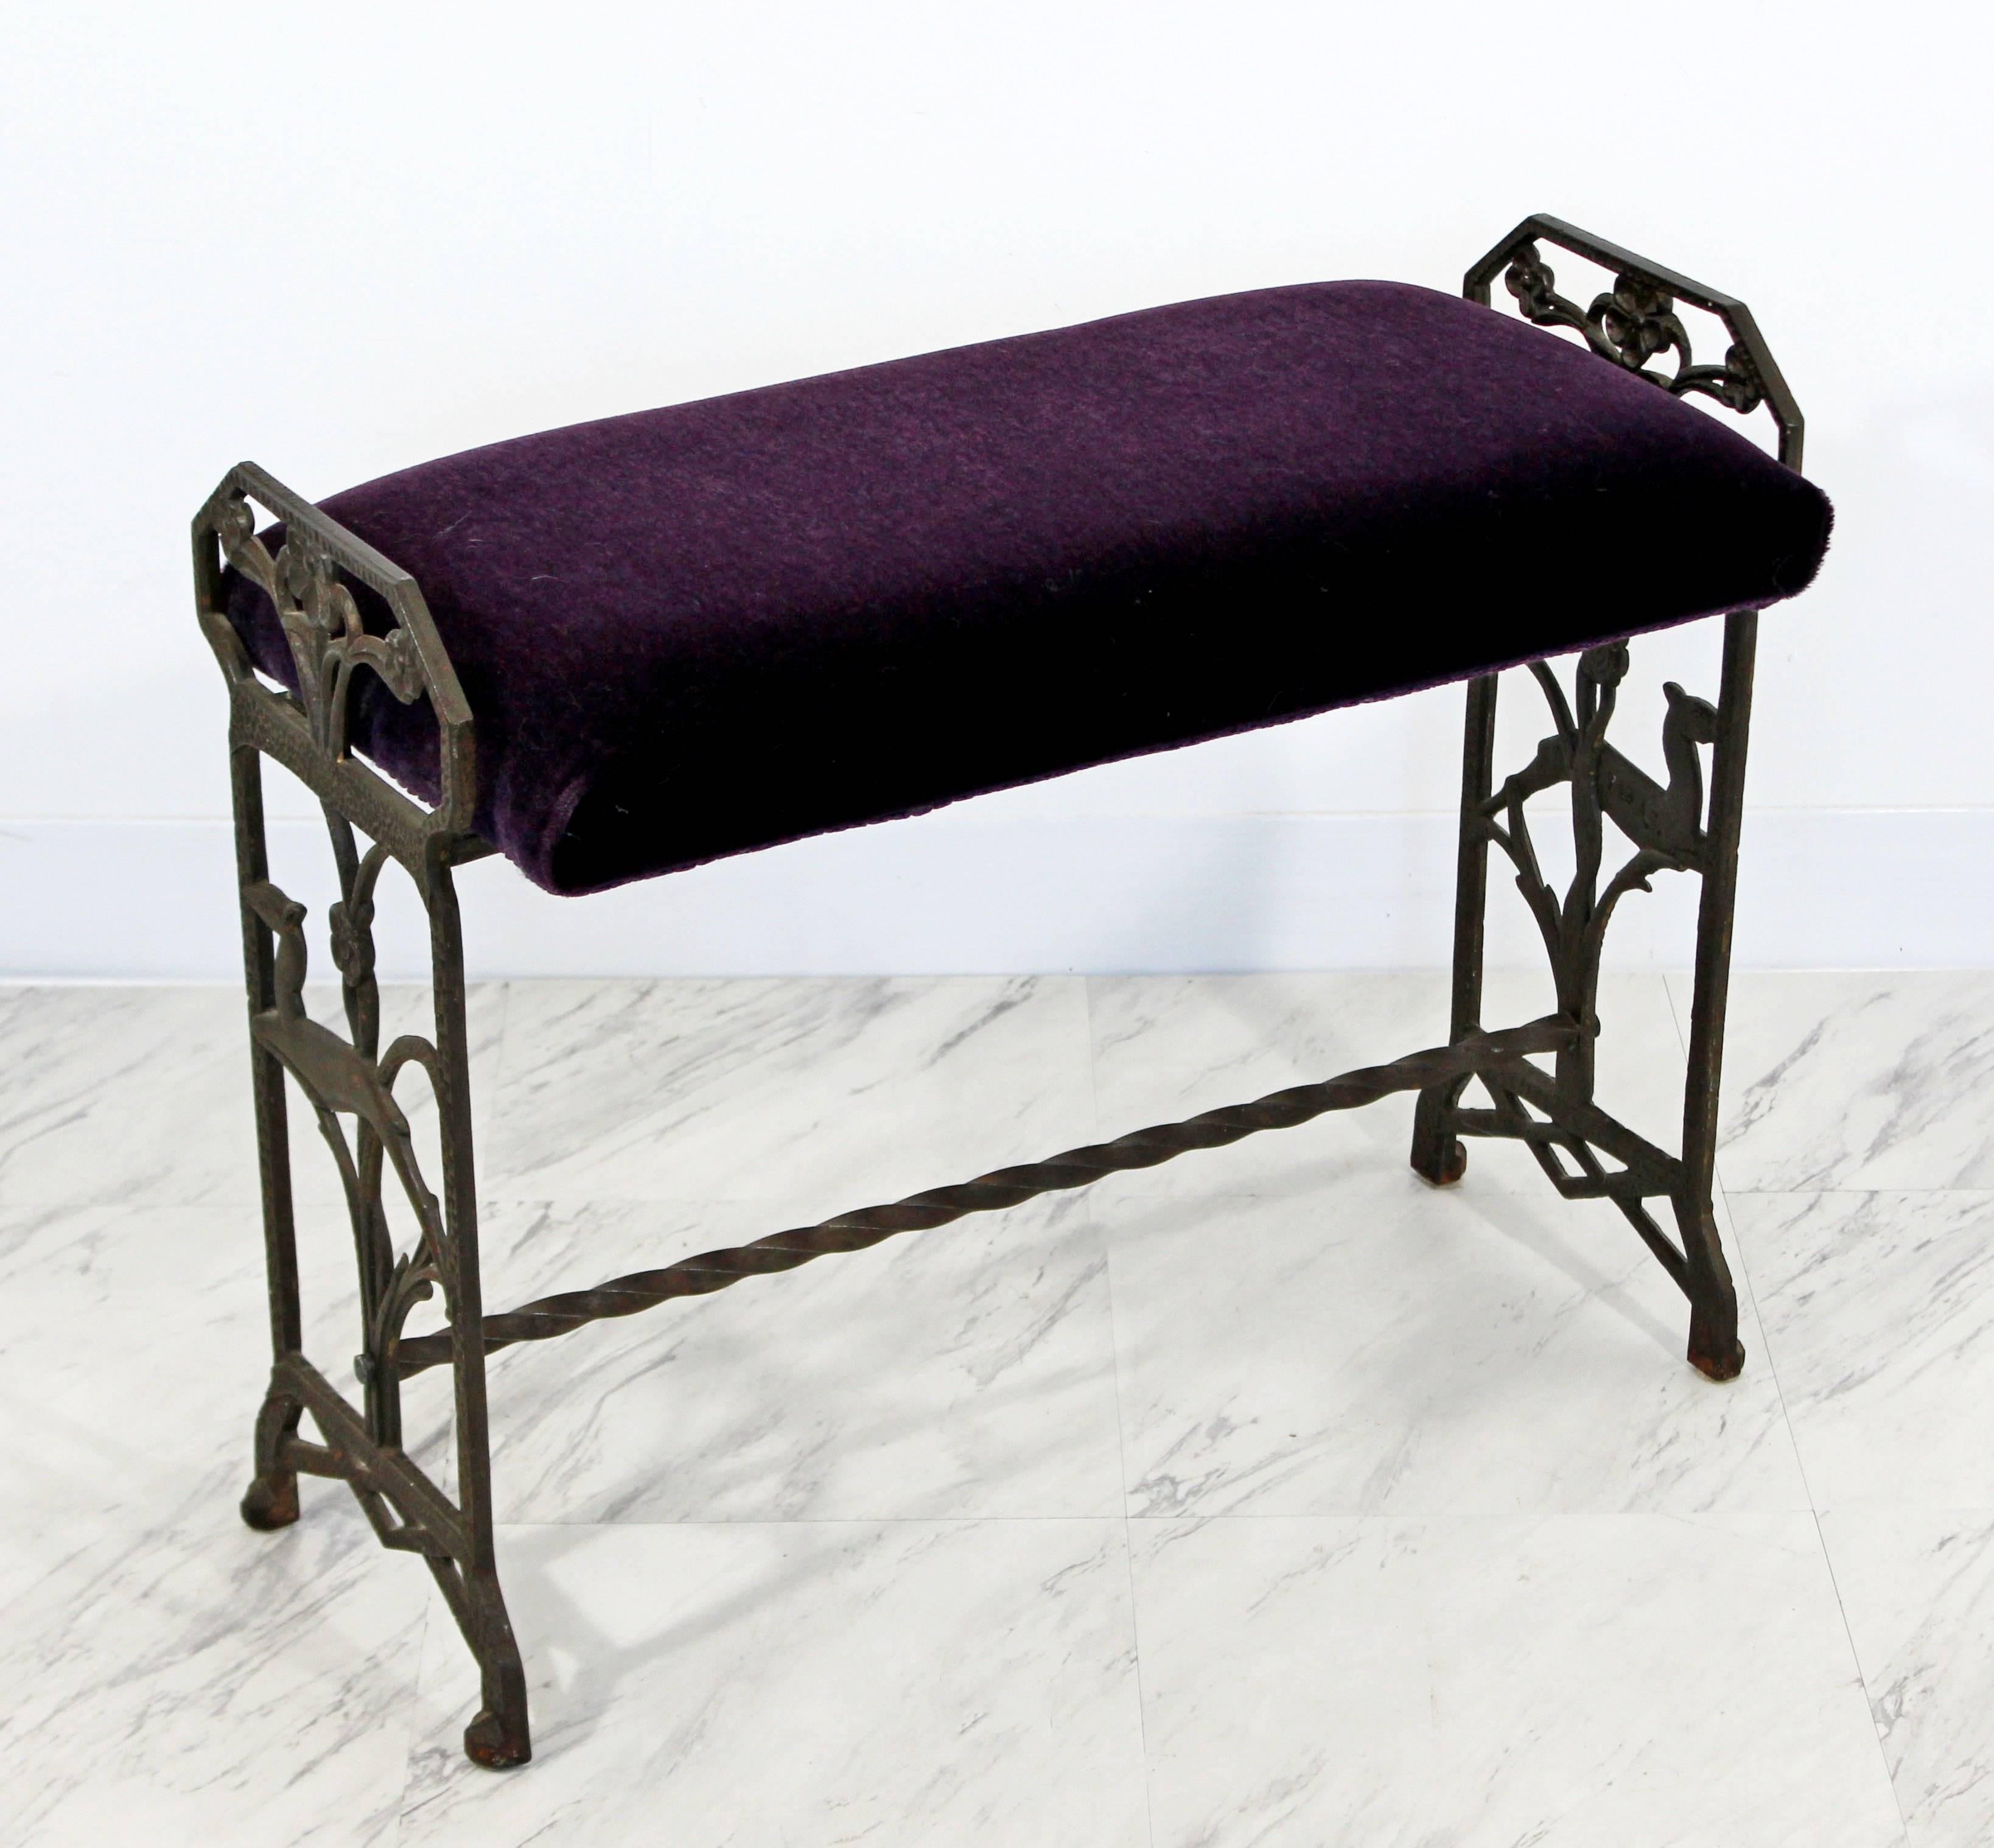 American Art Deco Wrought Iron Bench Seat Purple Velvet Gothic Revival Style